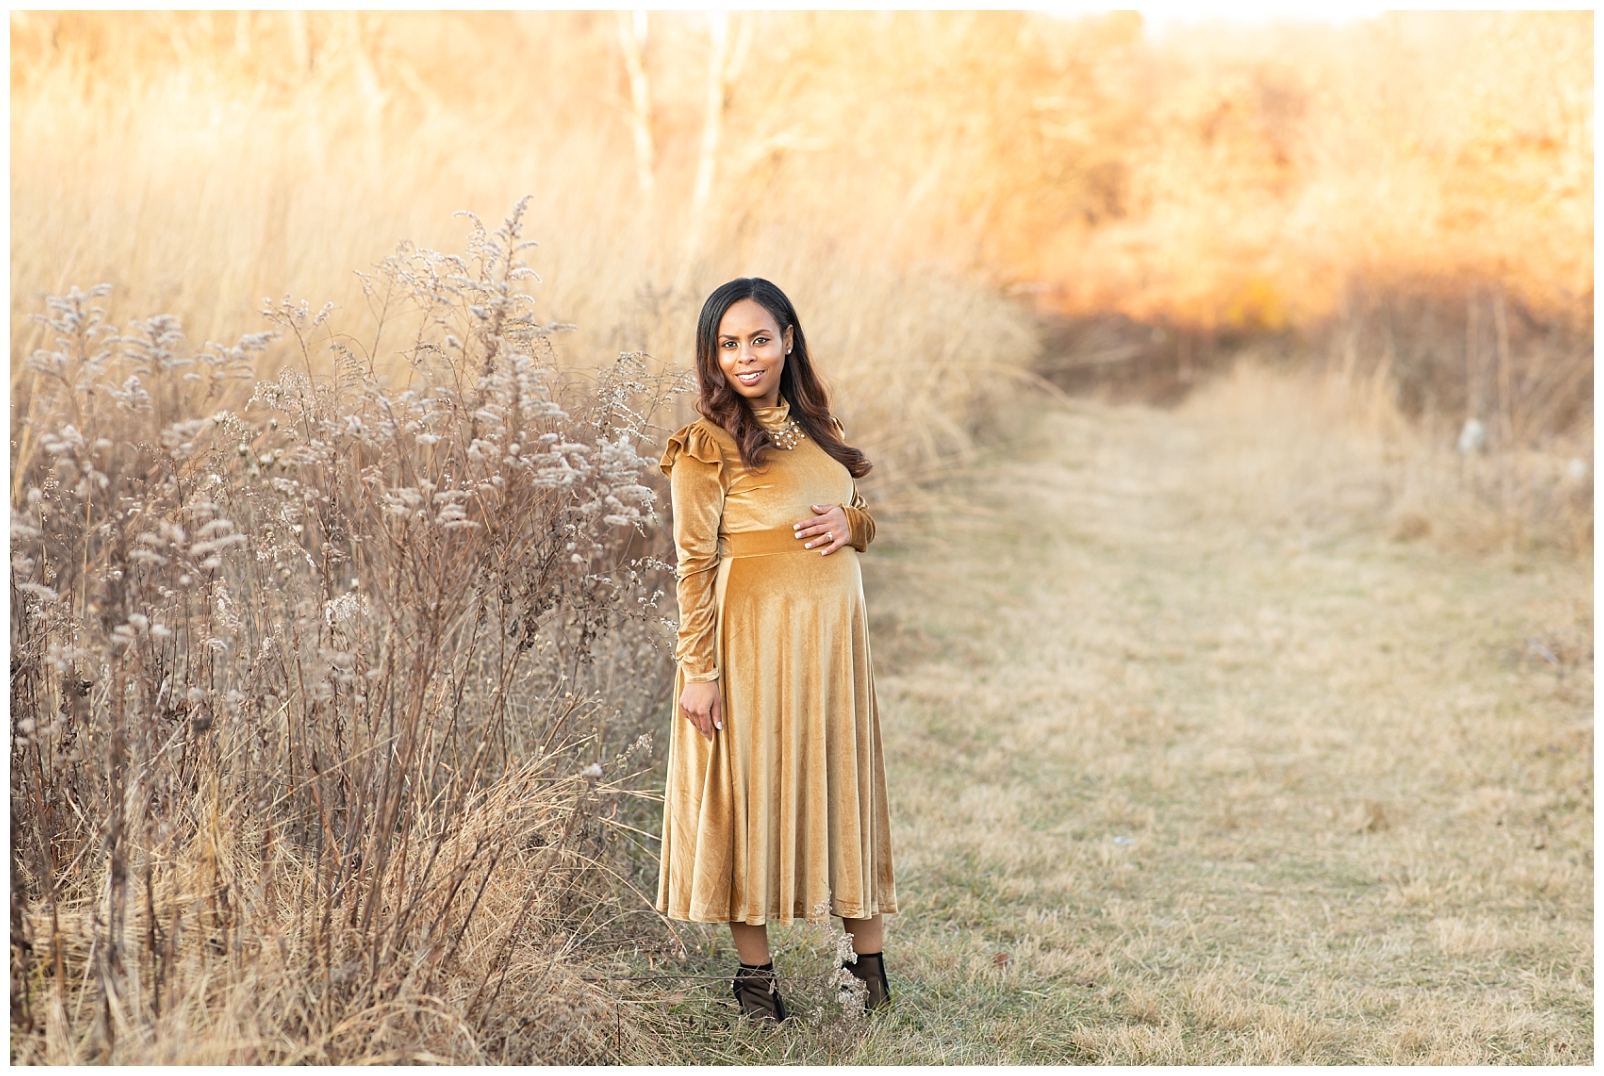 Lady wearing a gold dress standing in a field